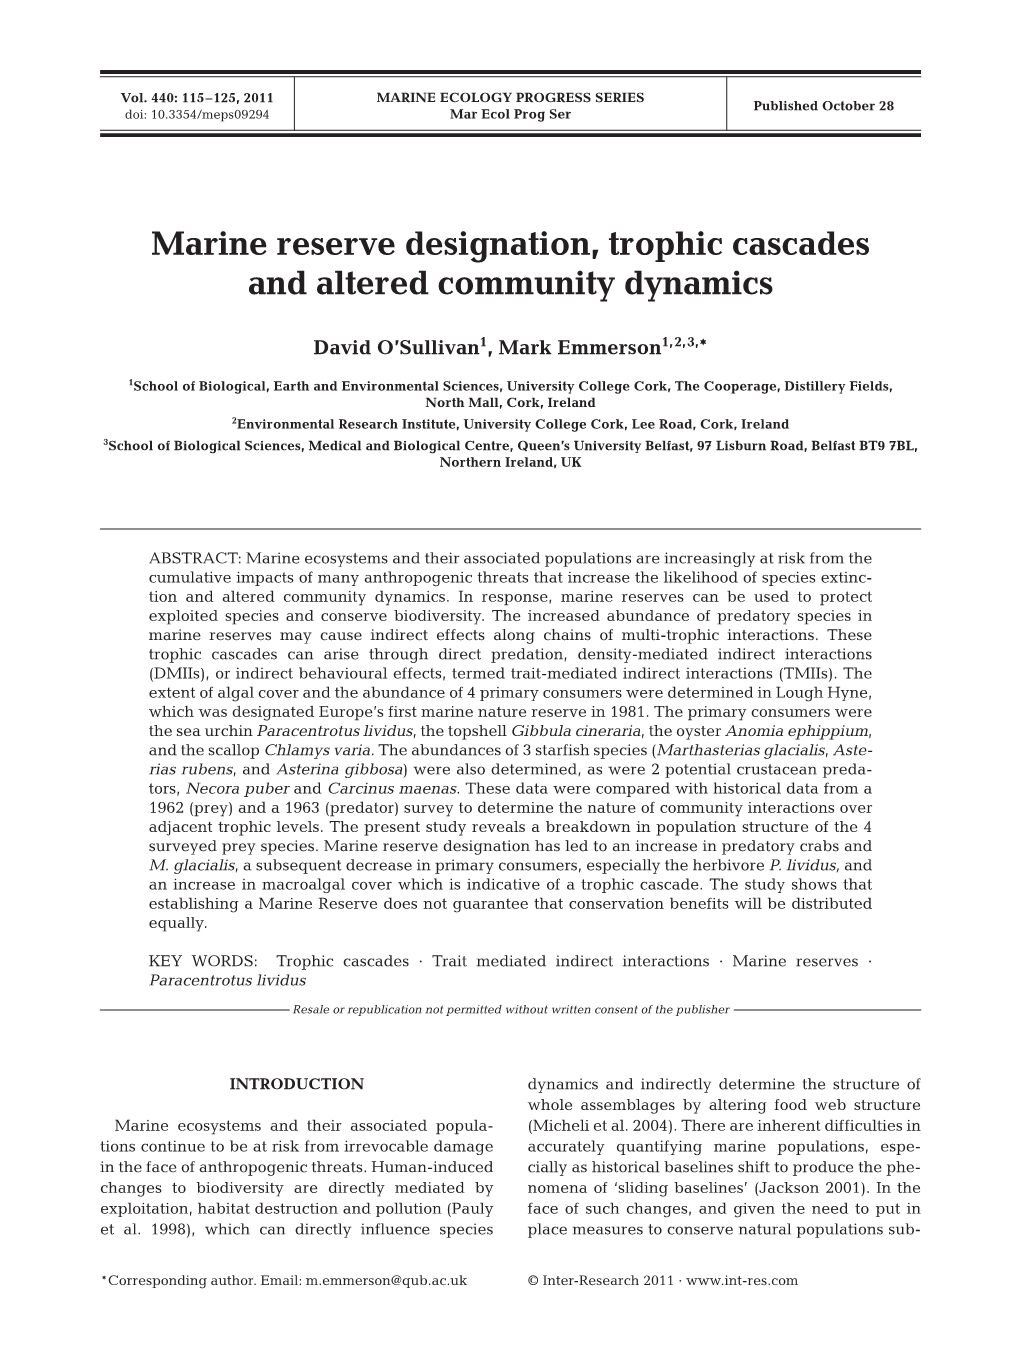 Marine Ecology Progress Series 440:115